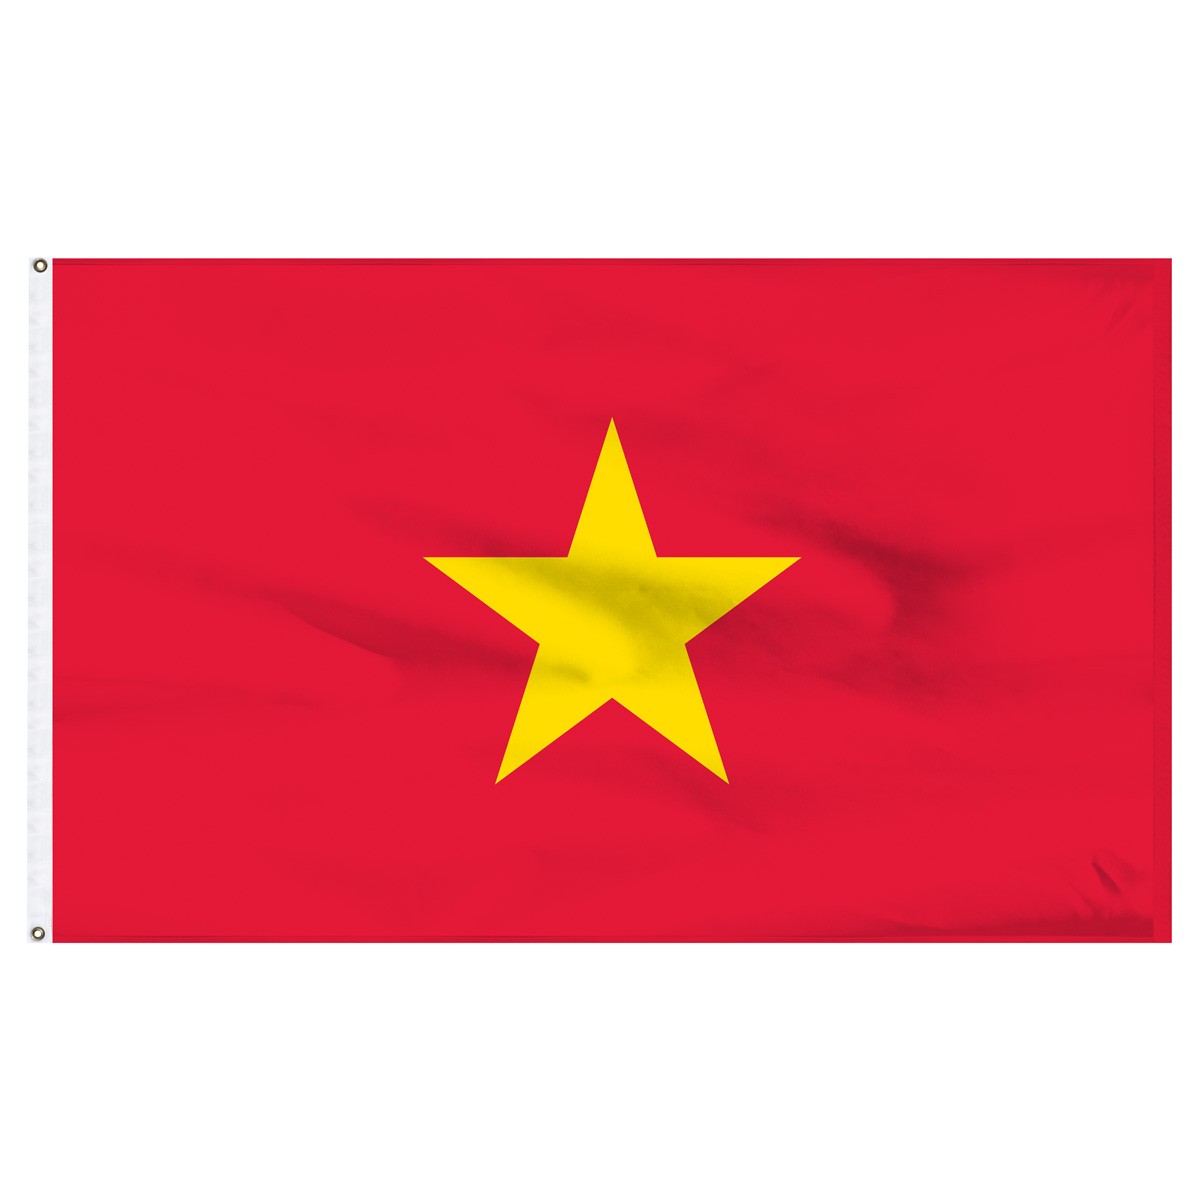 Vietnam Banner Roll Up